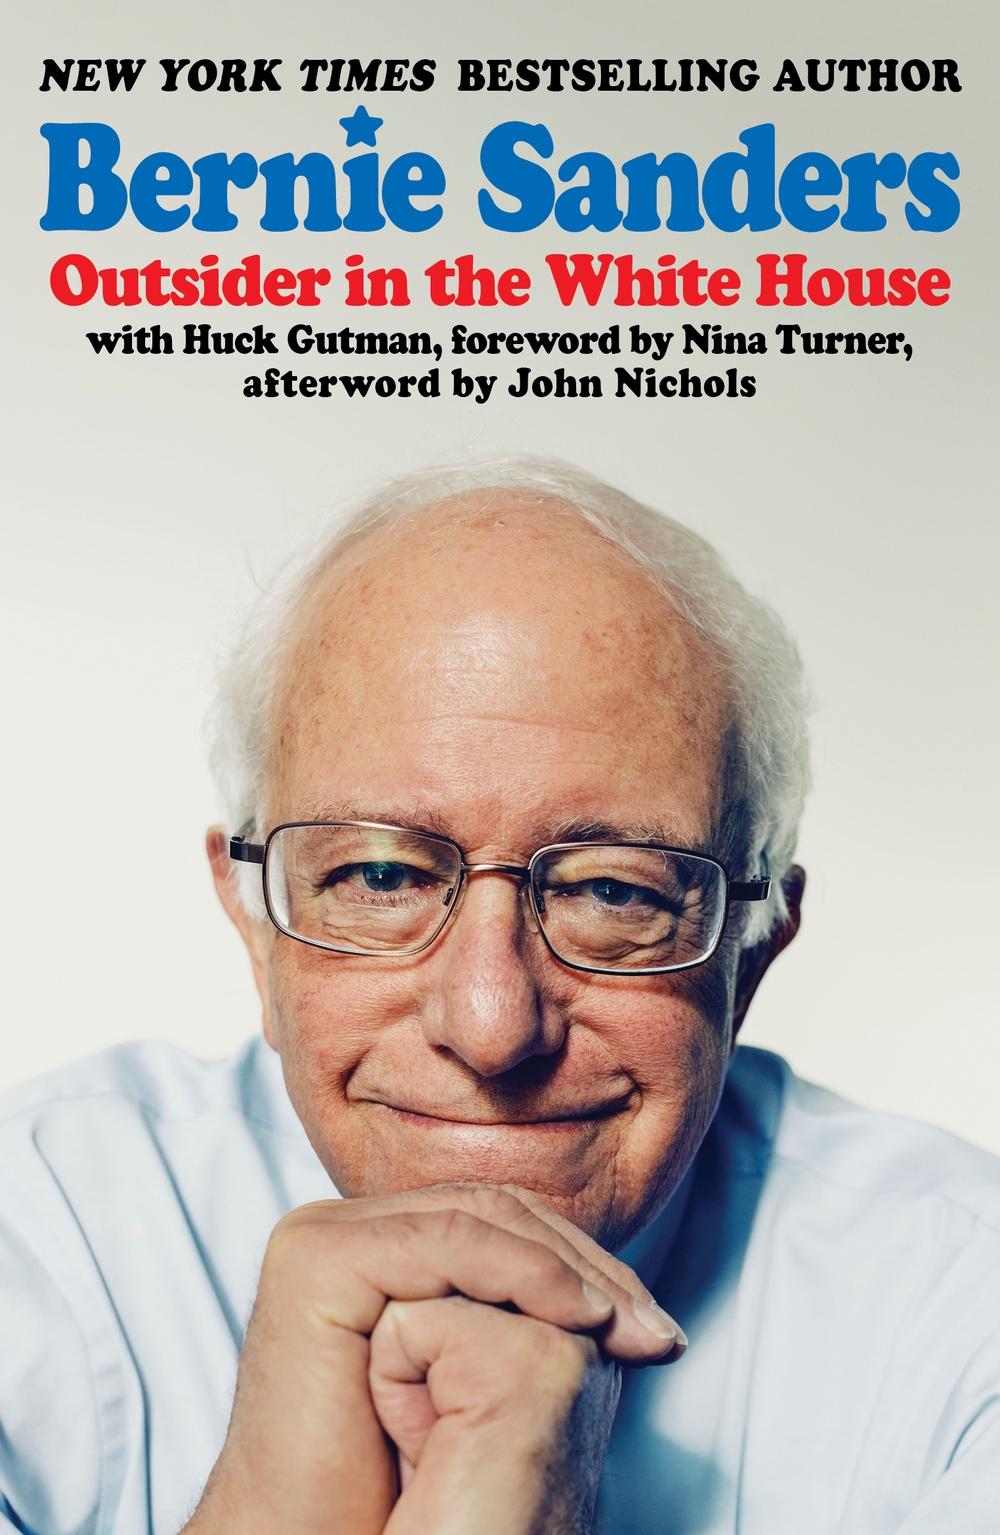 Outsider in the White House - Bernie Sanders